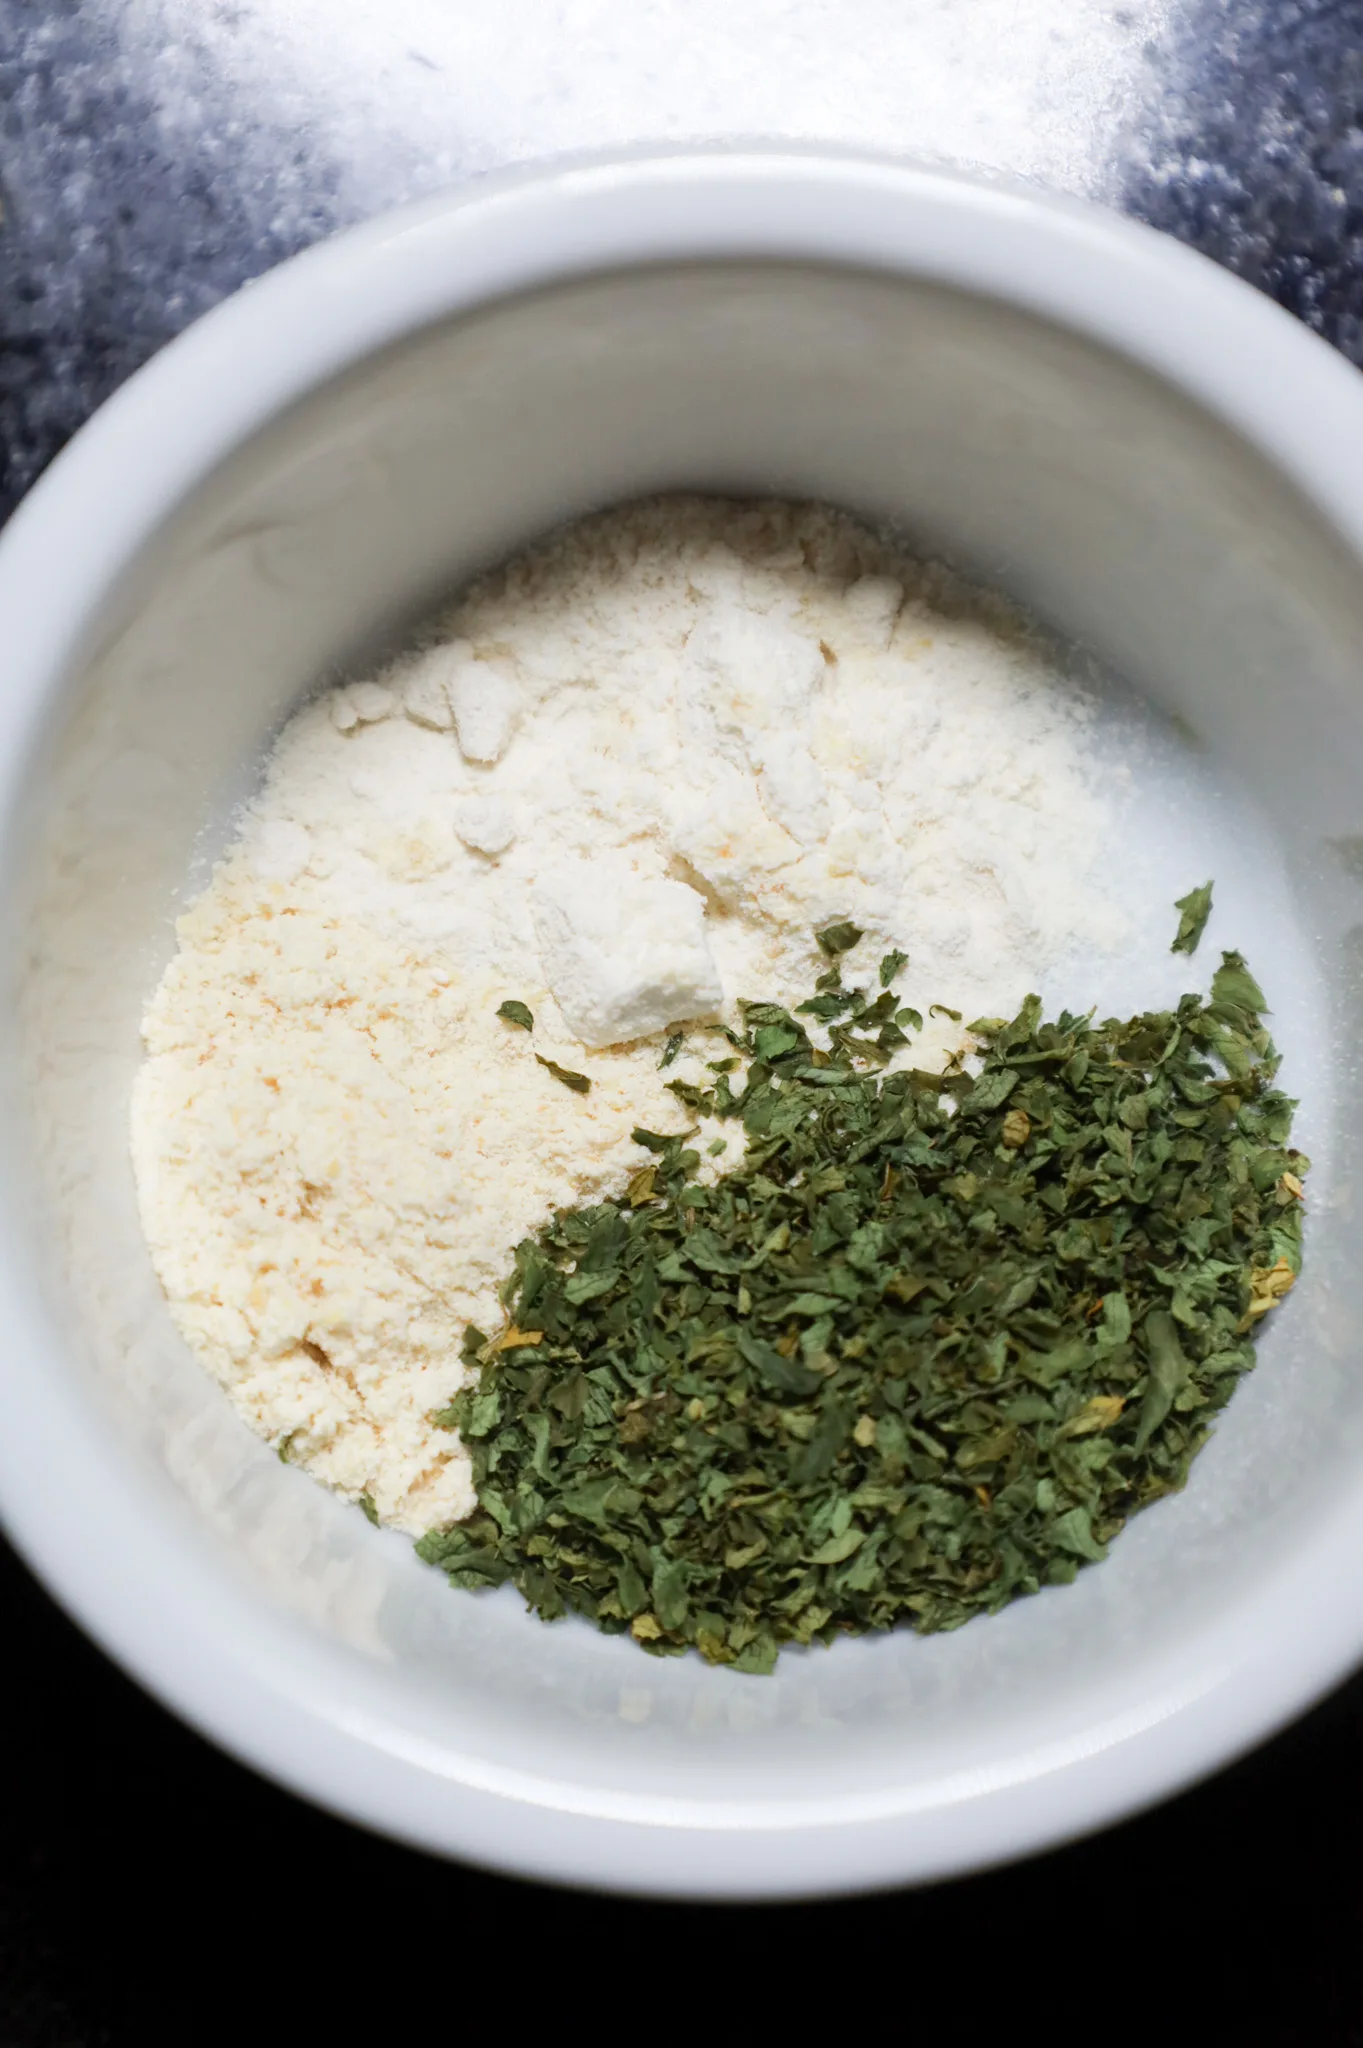 onion powder, garlic powder and parley flakes in a small bowl